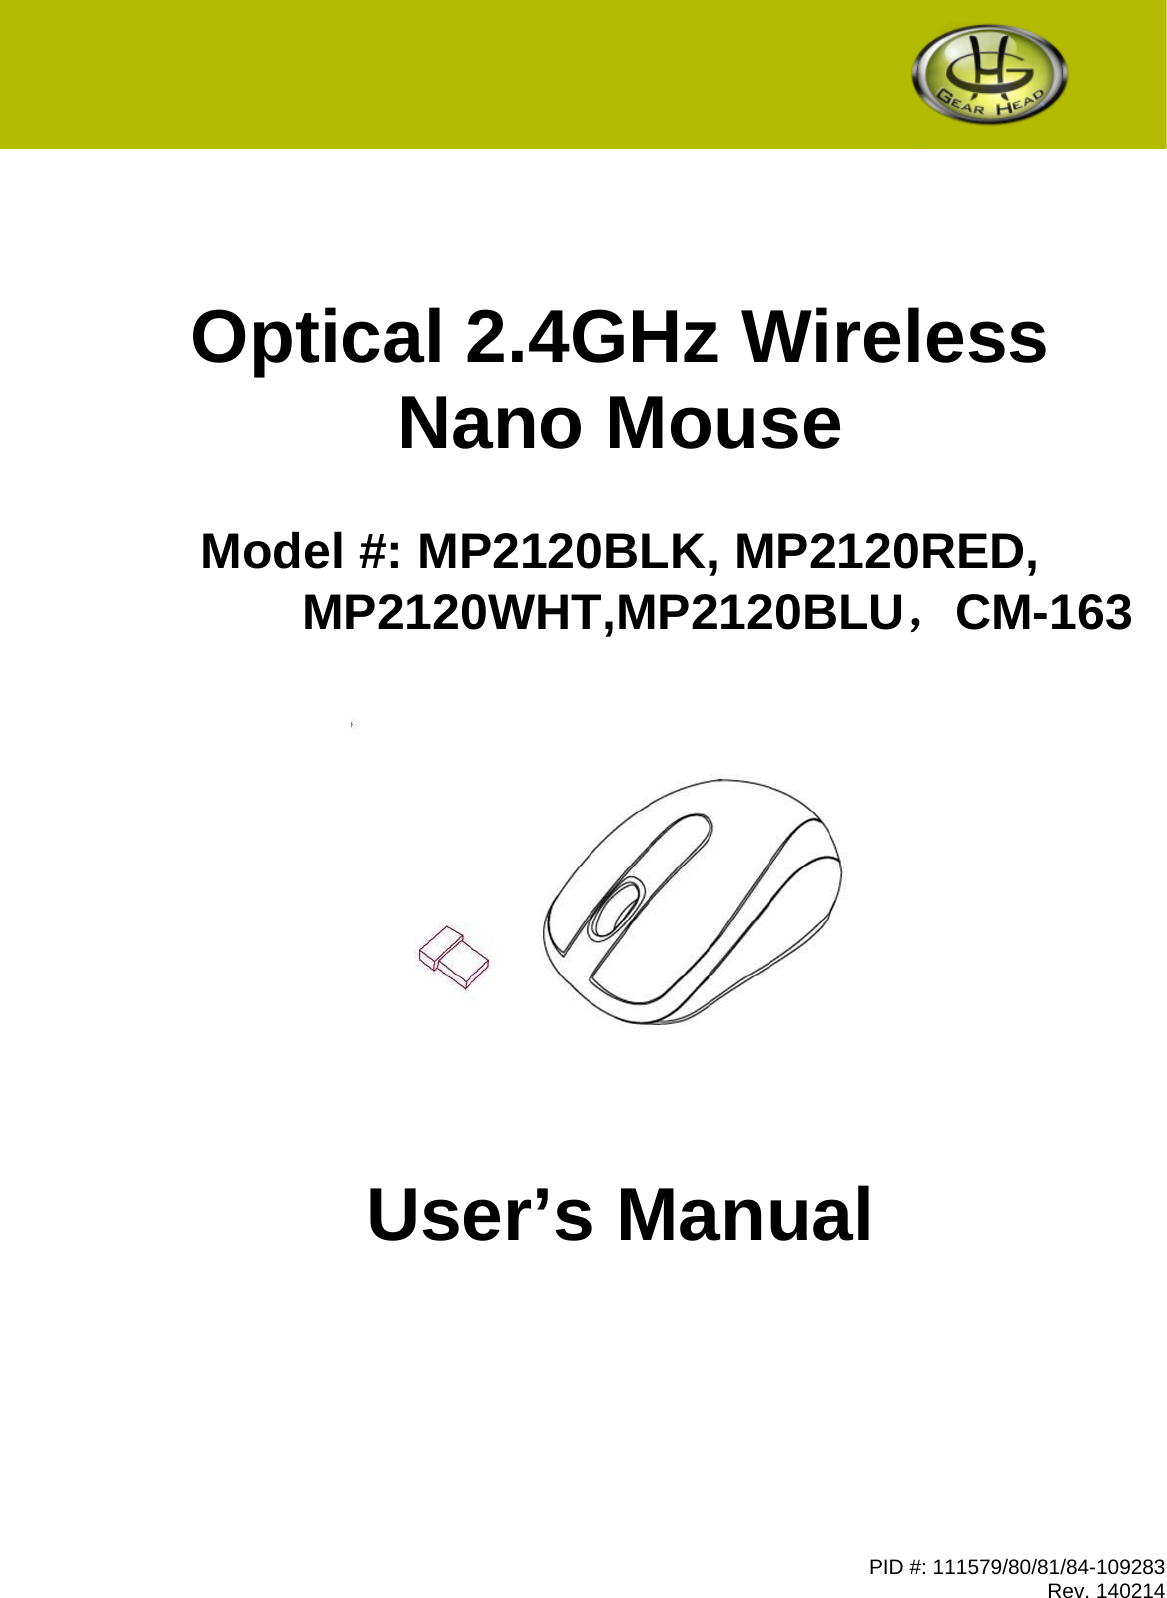 PID #: 111579/80/81/84-109283 Rev. 140214       Optical 2.4GHz Wireless  Nano Mouse   Model #: MP2120BLK, MP2120RED,               MP2120WHT,MP2120BLU，CM-163       User’s Manual 